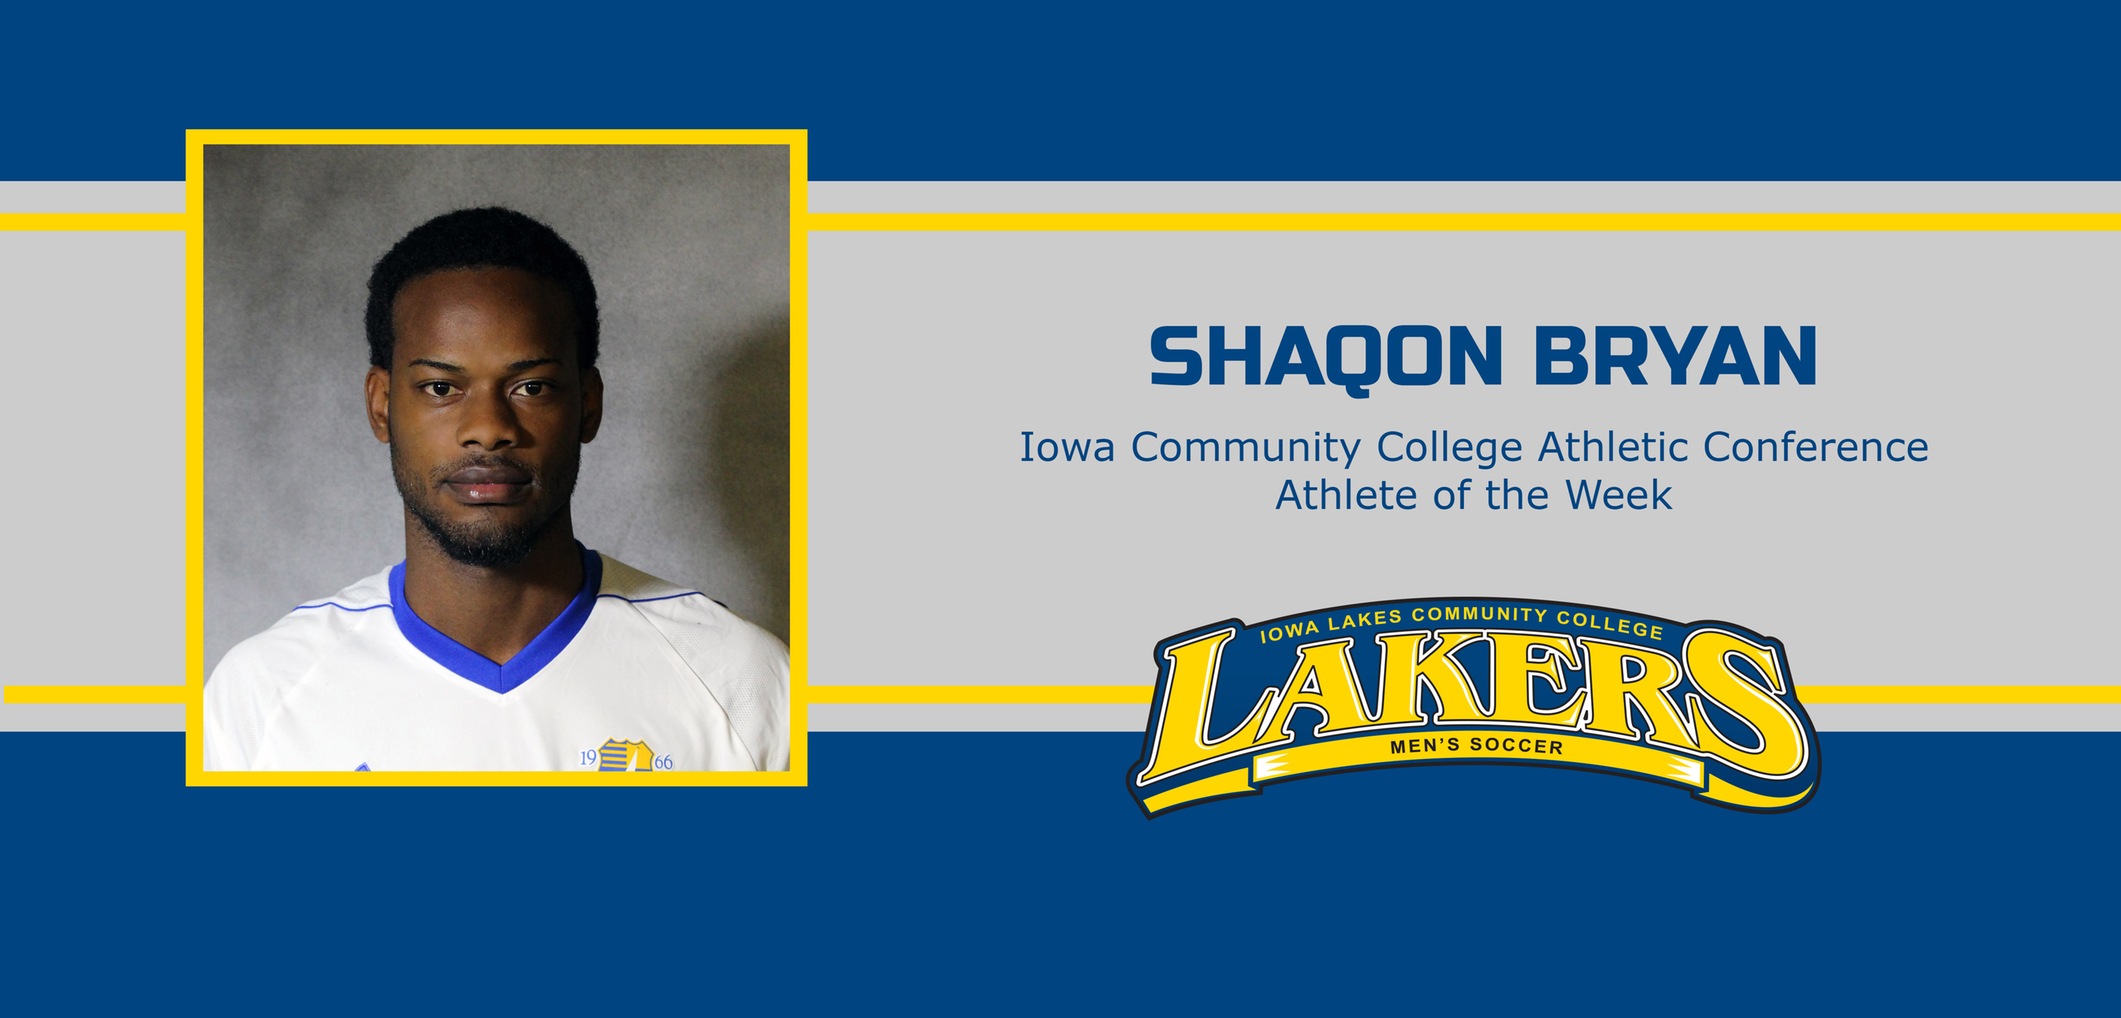 Jamaican Striker Shaqon Bryan, Named ICCAC Athlete of the week.